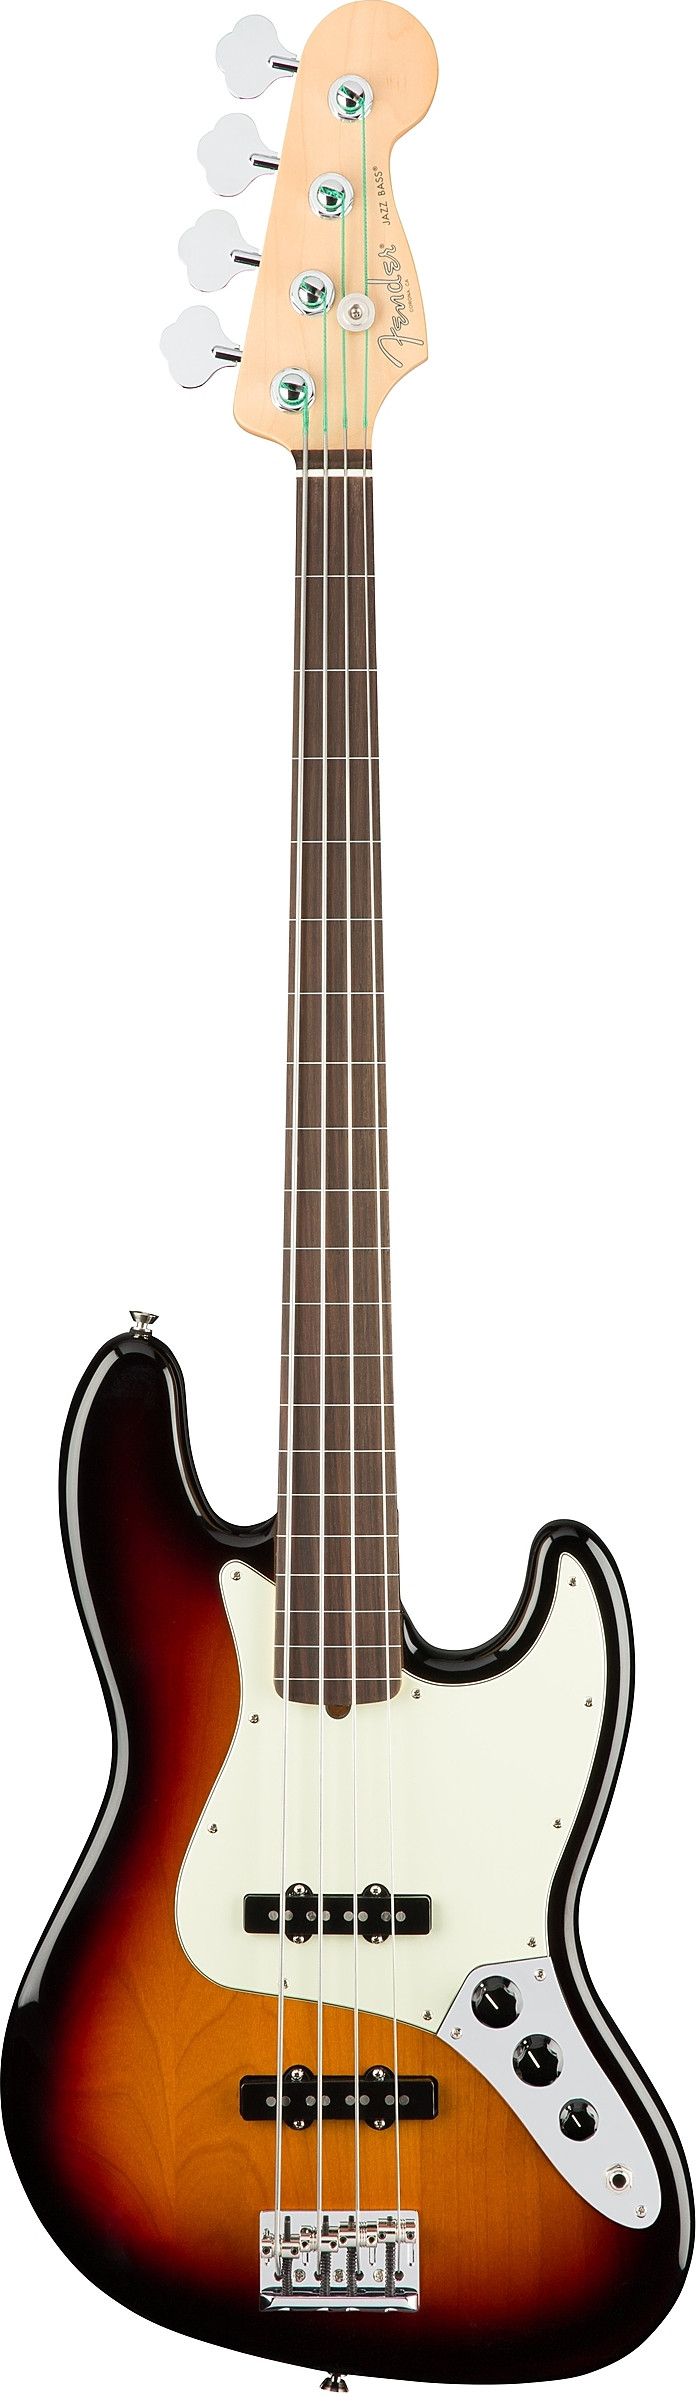 American Professional Jazz Bass Fretless by Fender